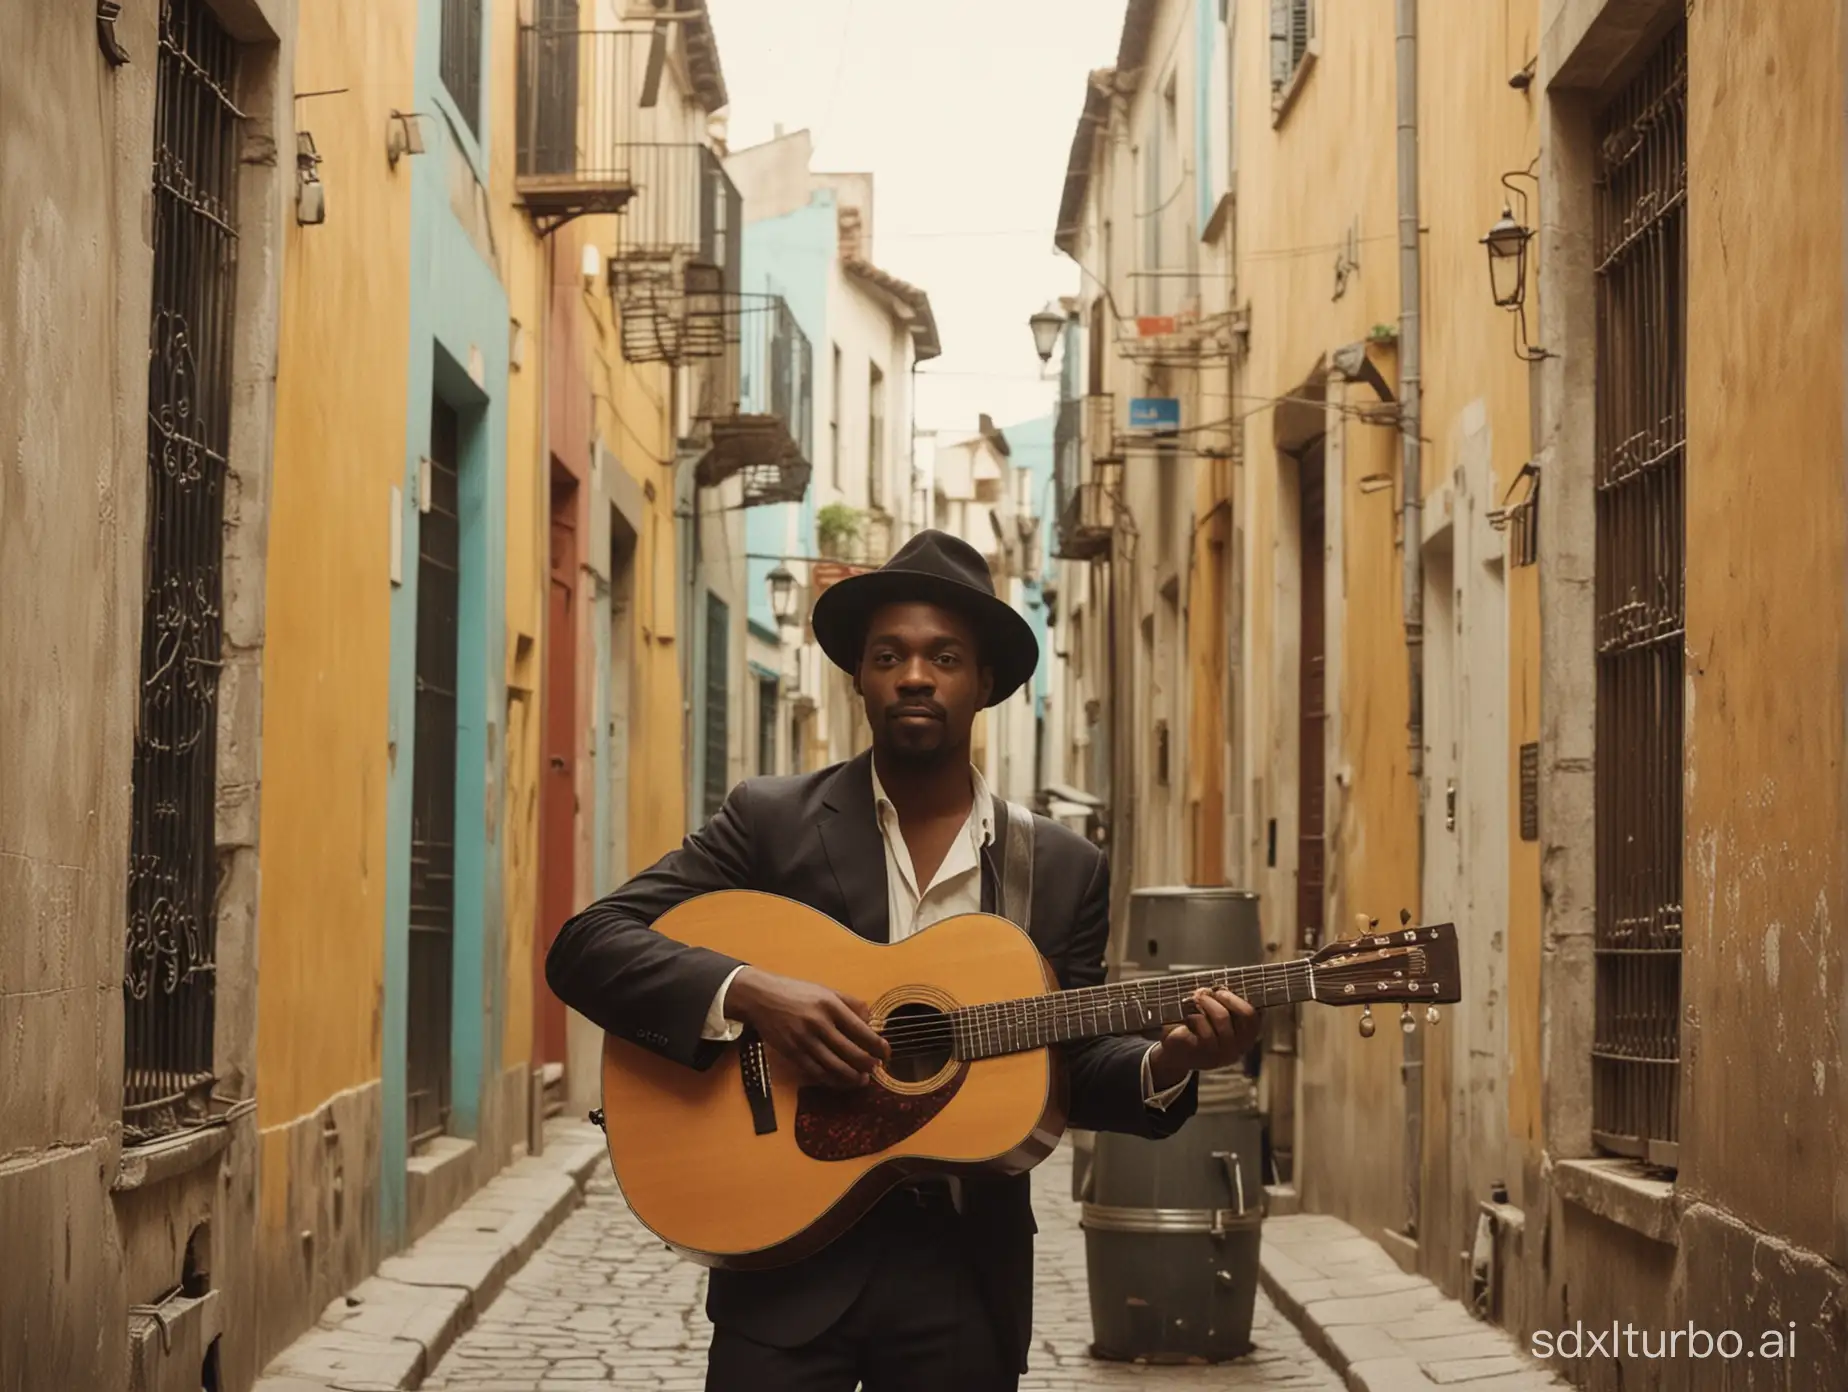 Retro-Musician-Ike-Willis-Performing-in-Charming-Portuguese-Alley-on-Vintage-Kodak-Film-Stock